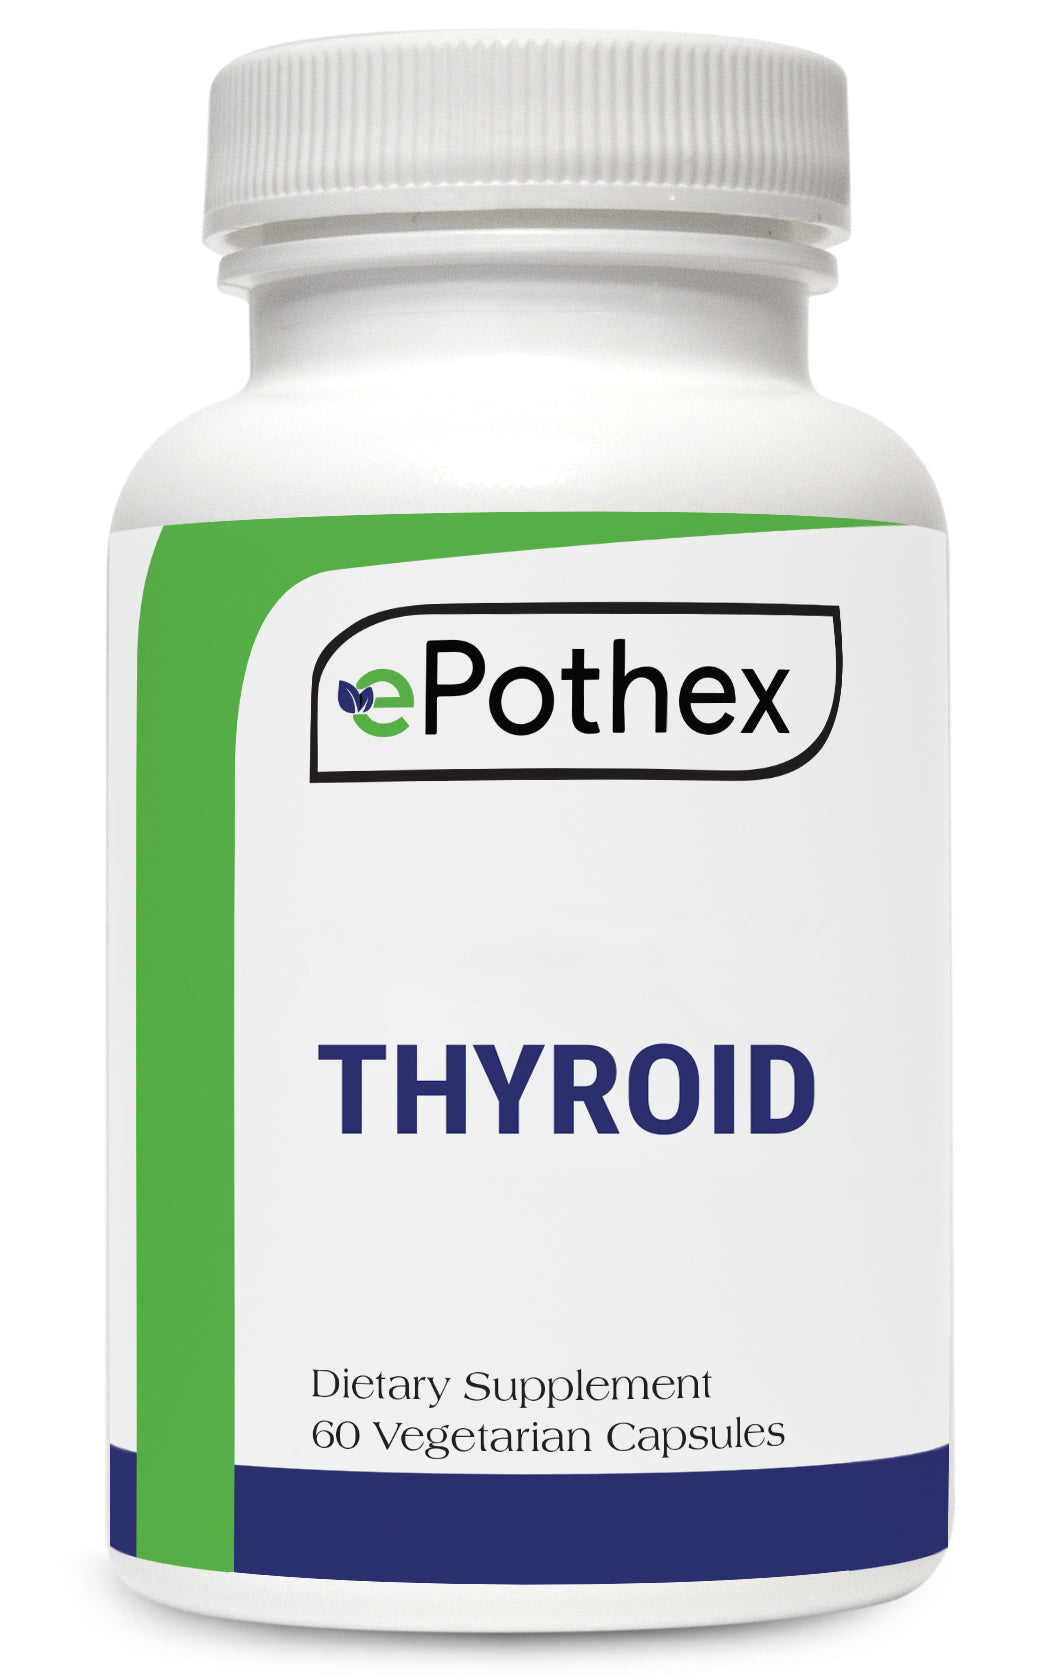 ePothex THYROID - Raw Grass-Fed Desiccated Bovine Thyroid - 60 capsules